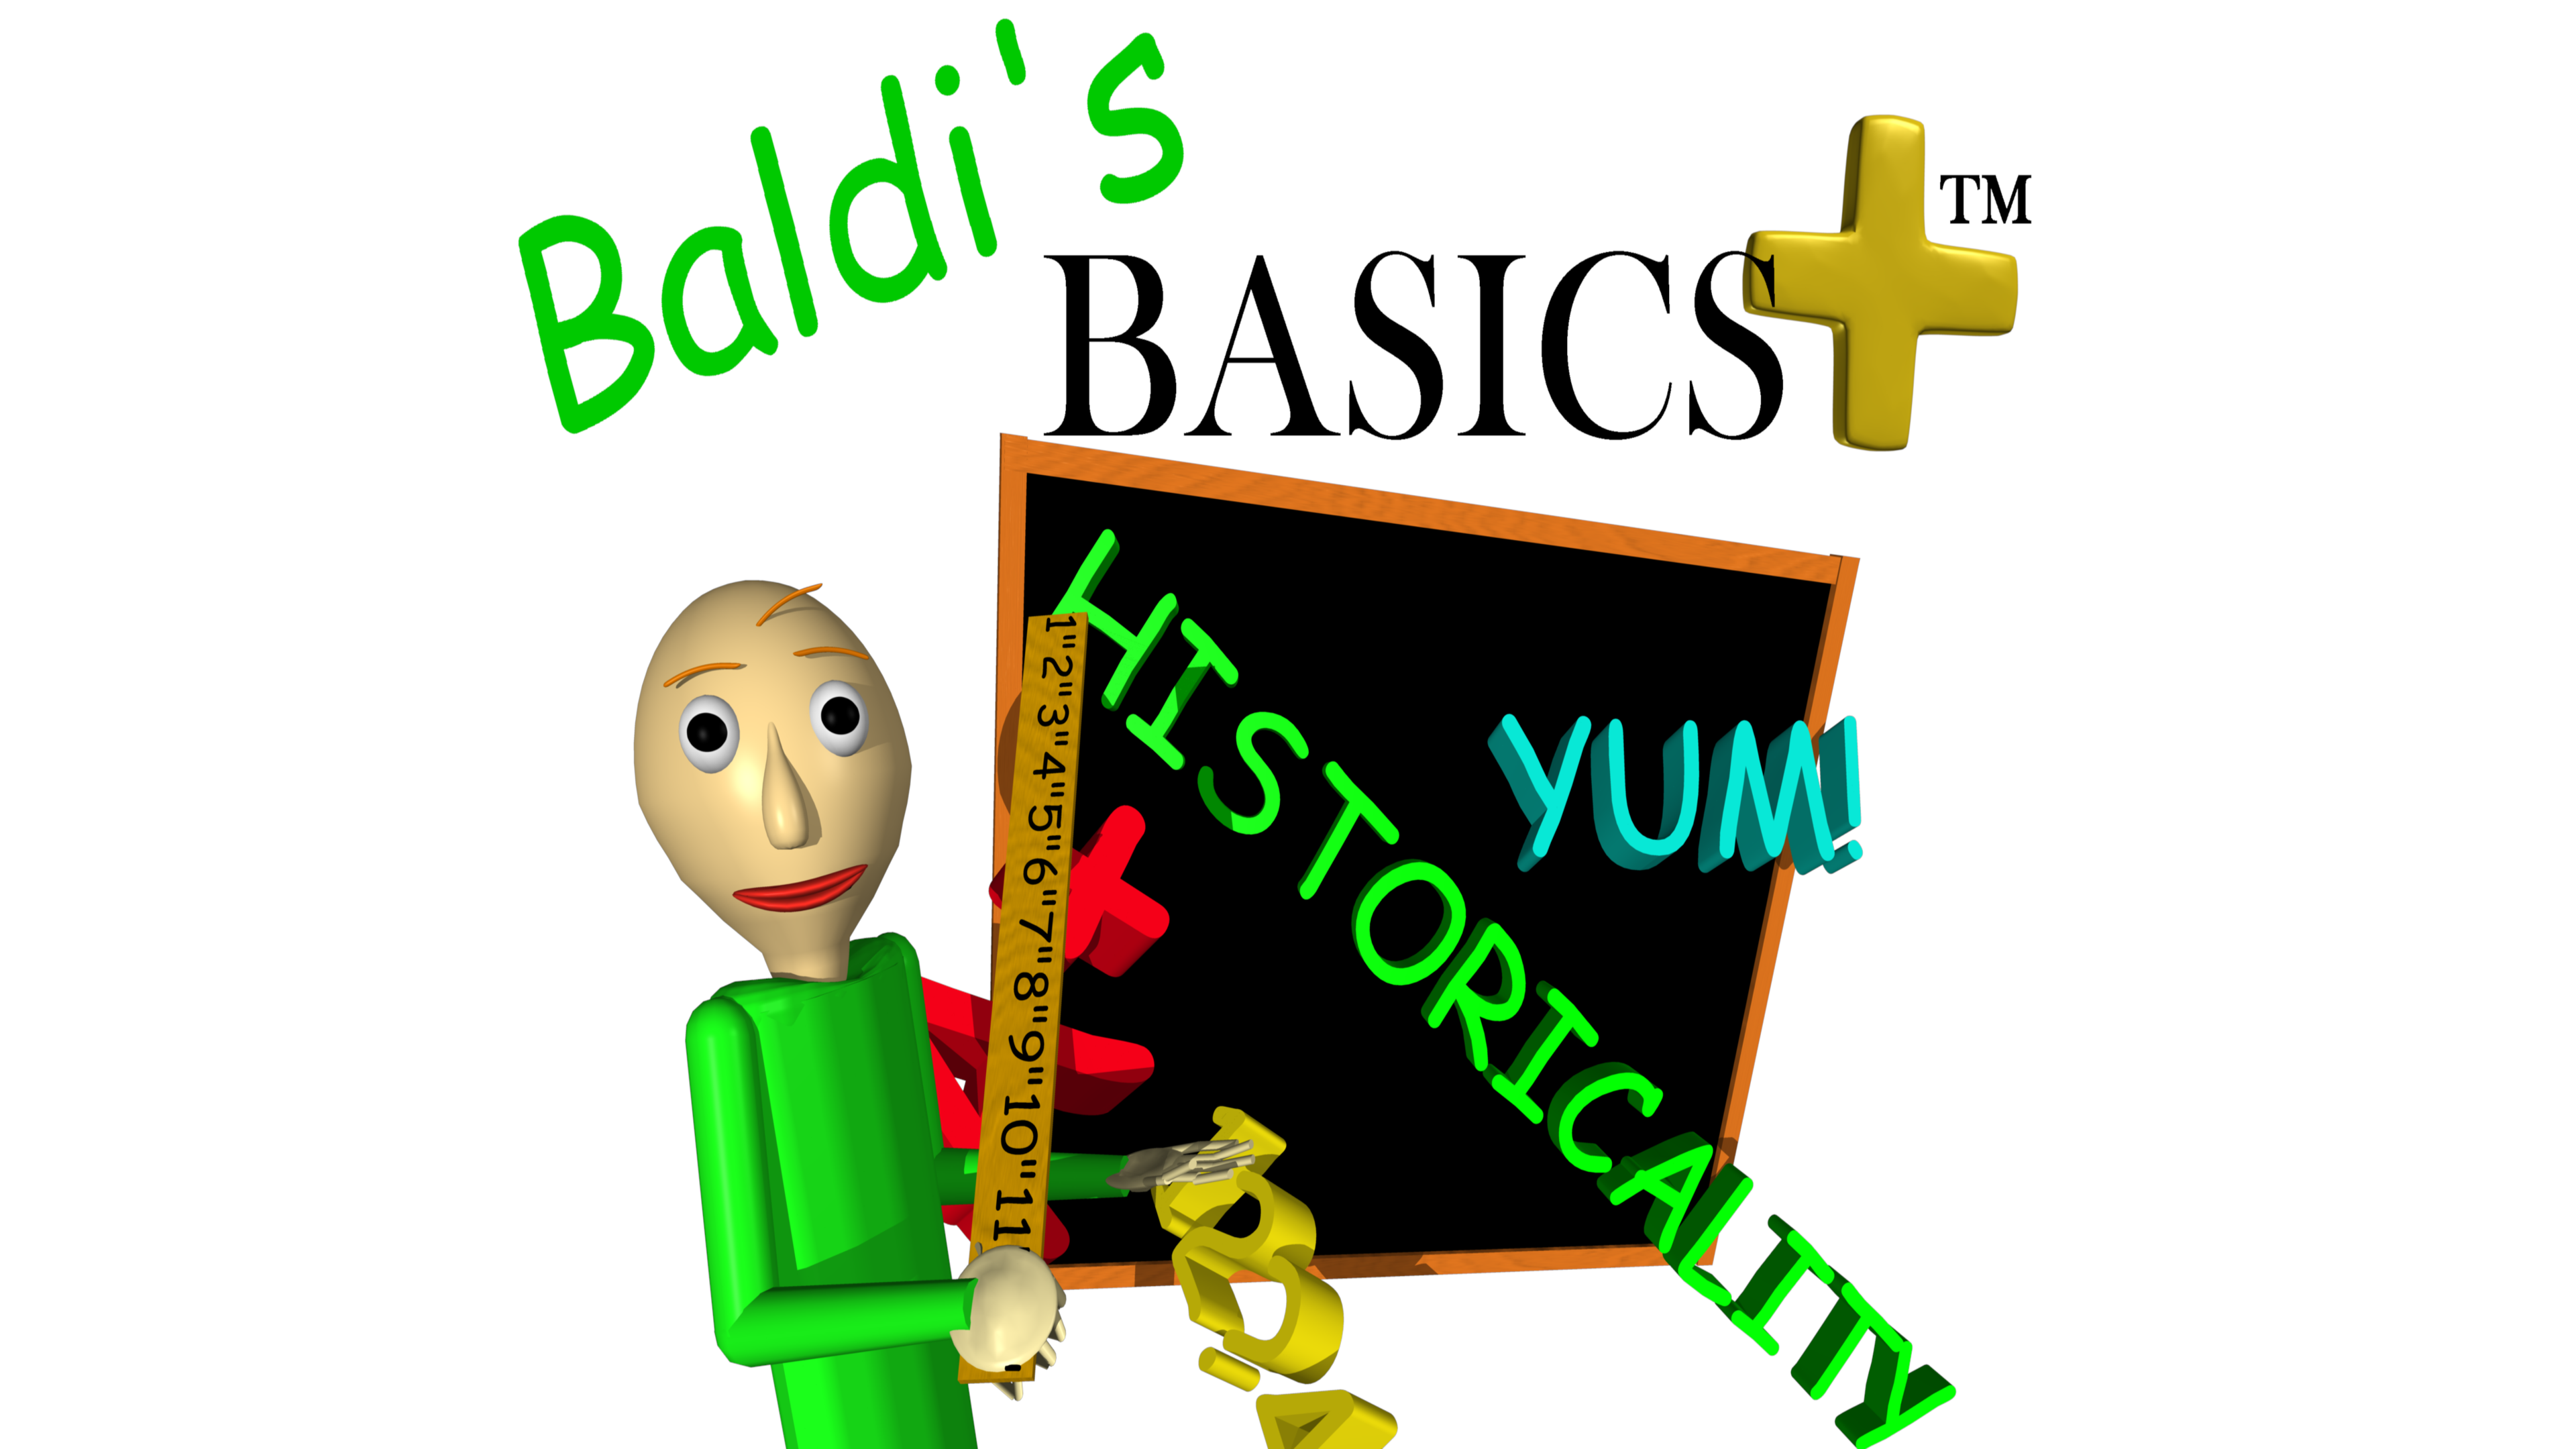 Baldi but with a mod menu